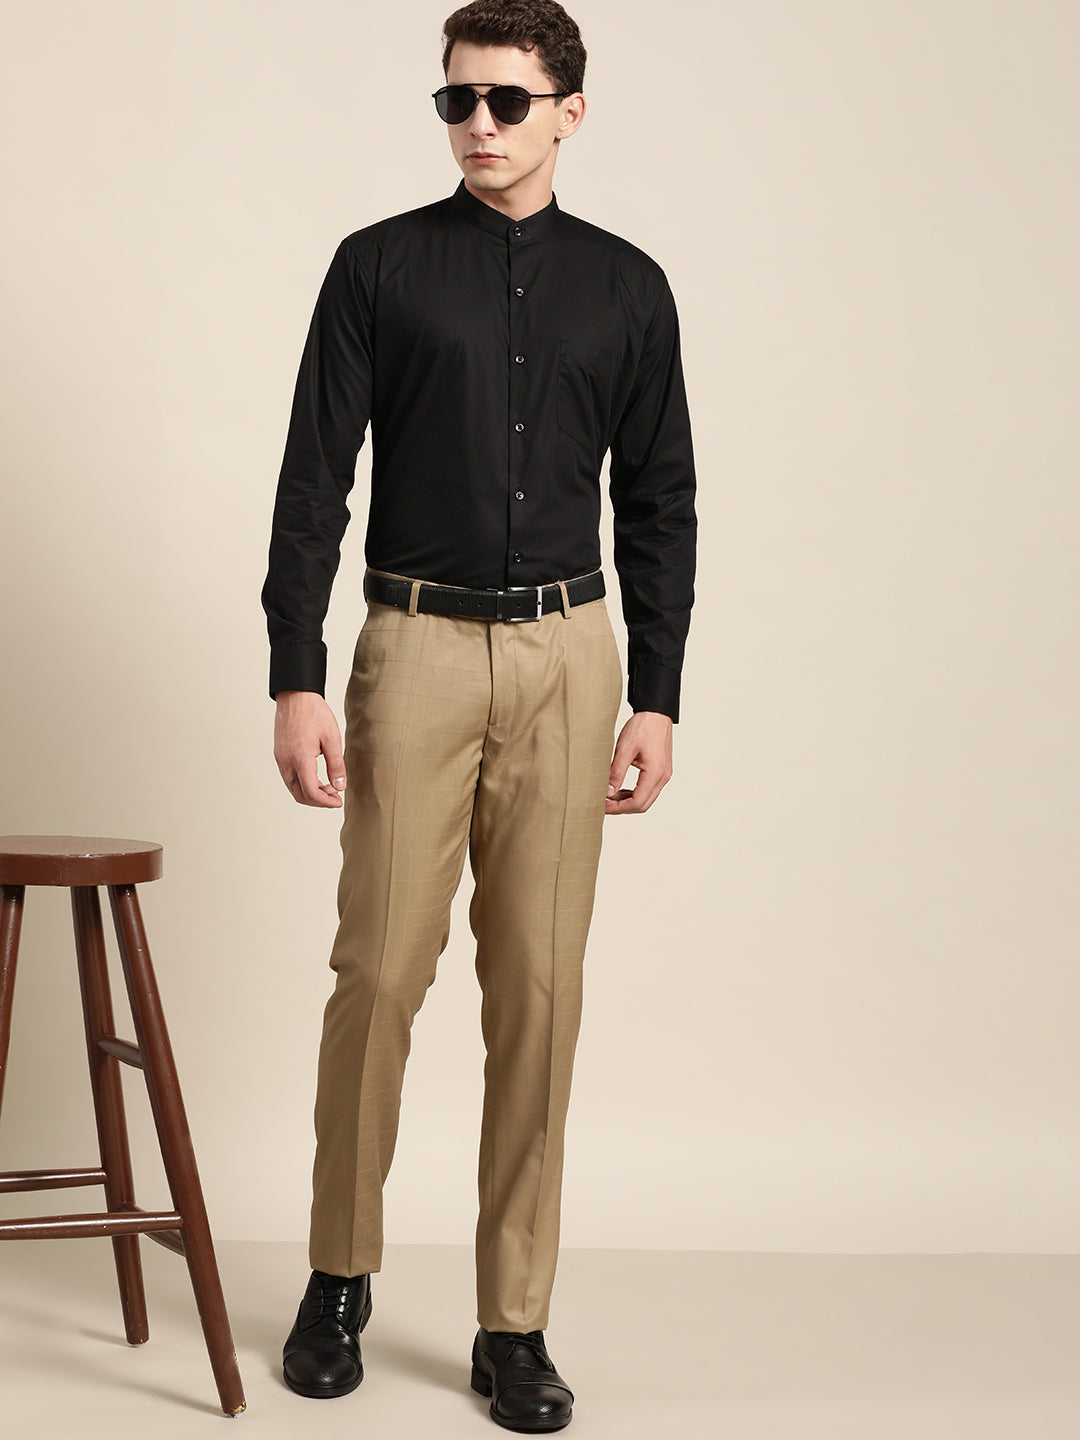 Men Elegant Black Shirt Black Trouser Office Wear Pant Shirt Mens Formal  Shirt and Pants Wedding Shirt and Pants Groom Wear Gift for Men - Etsy